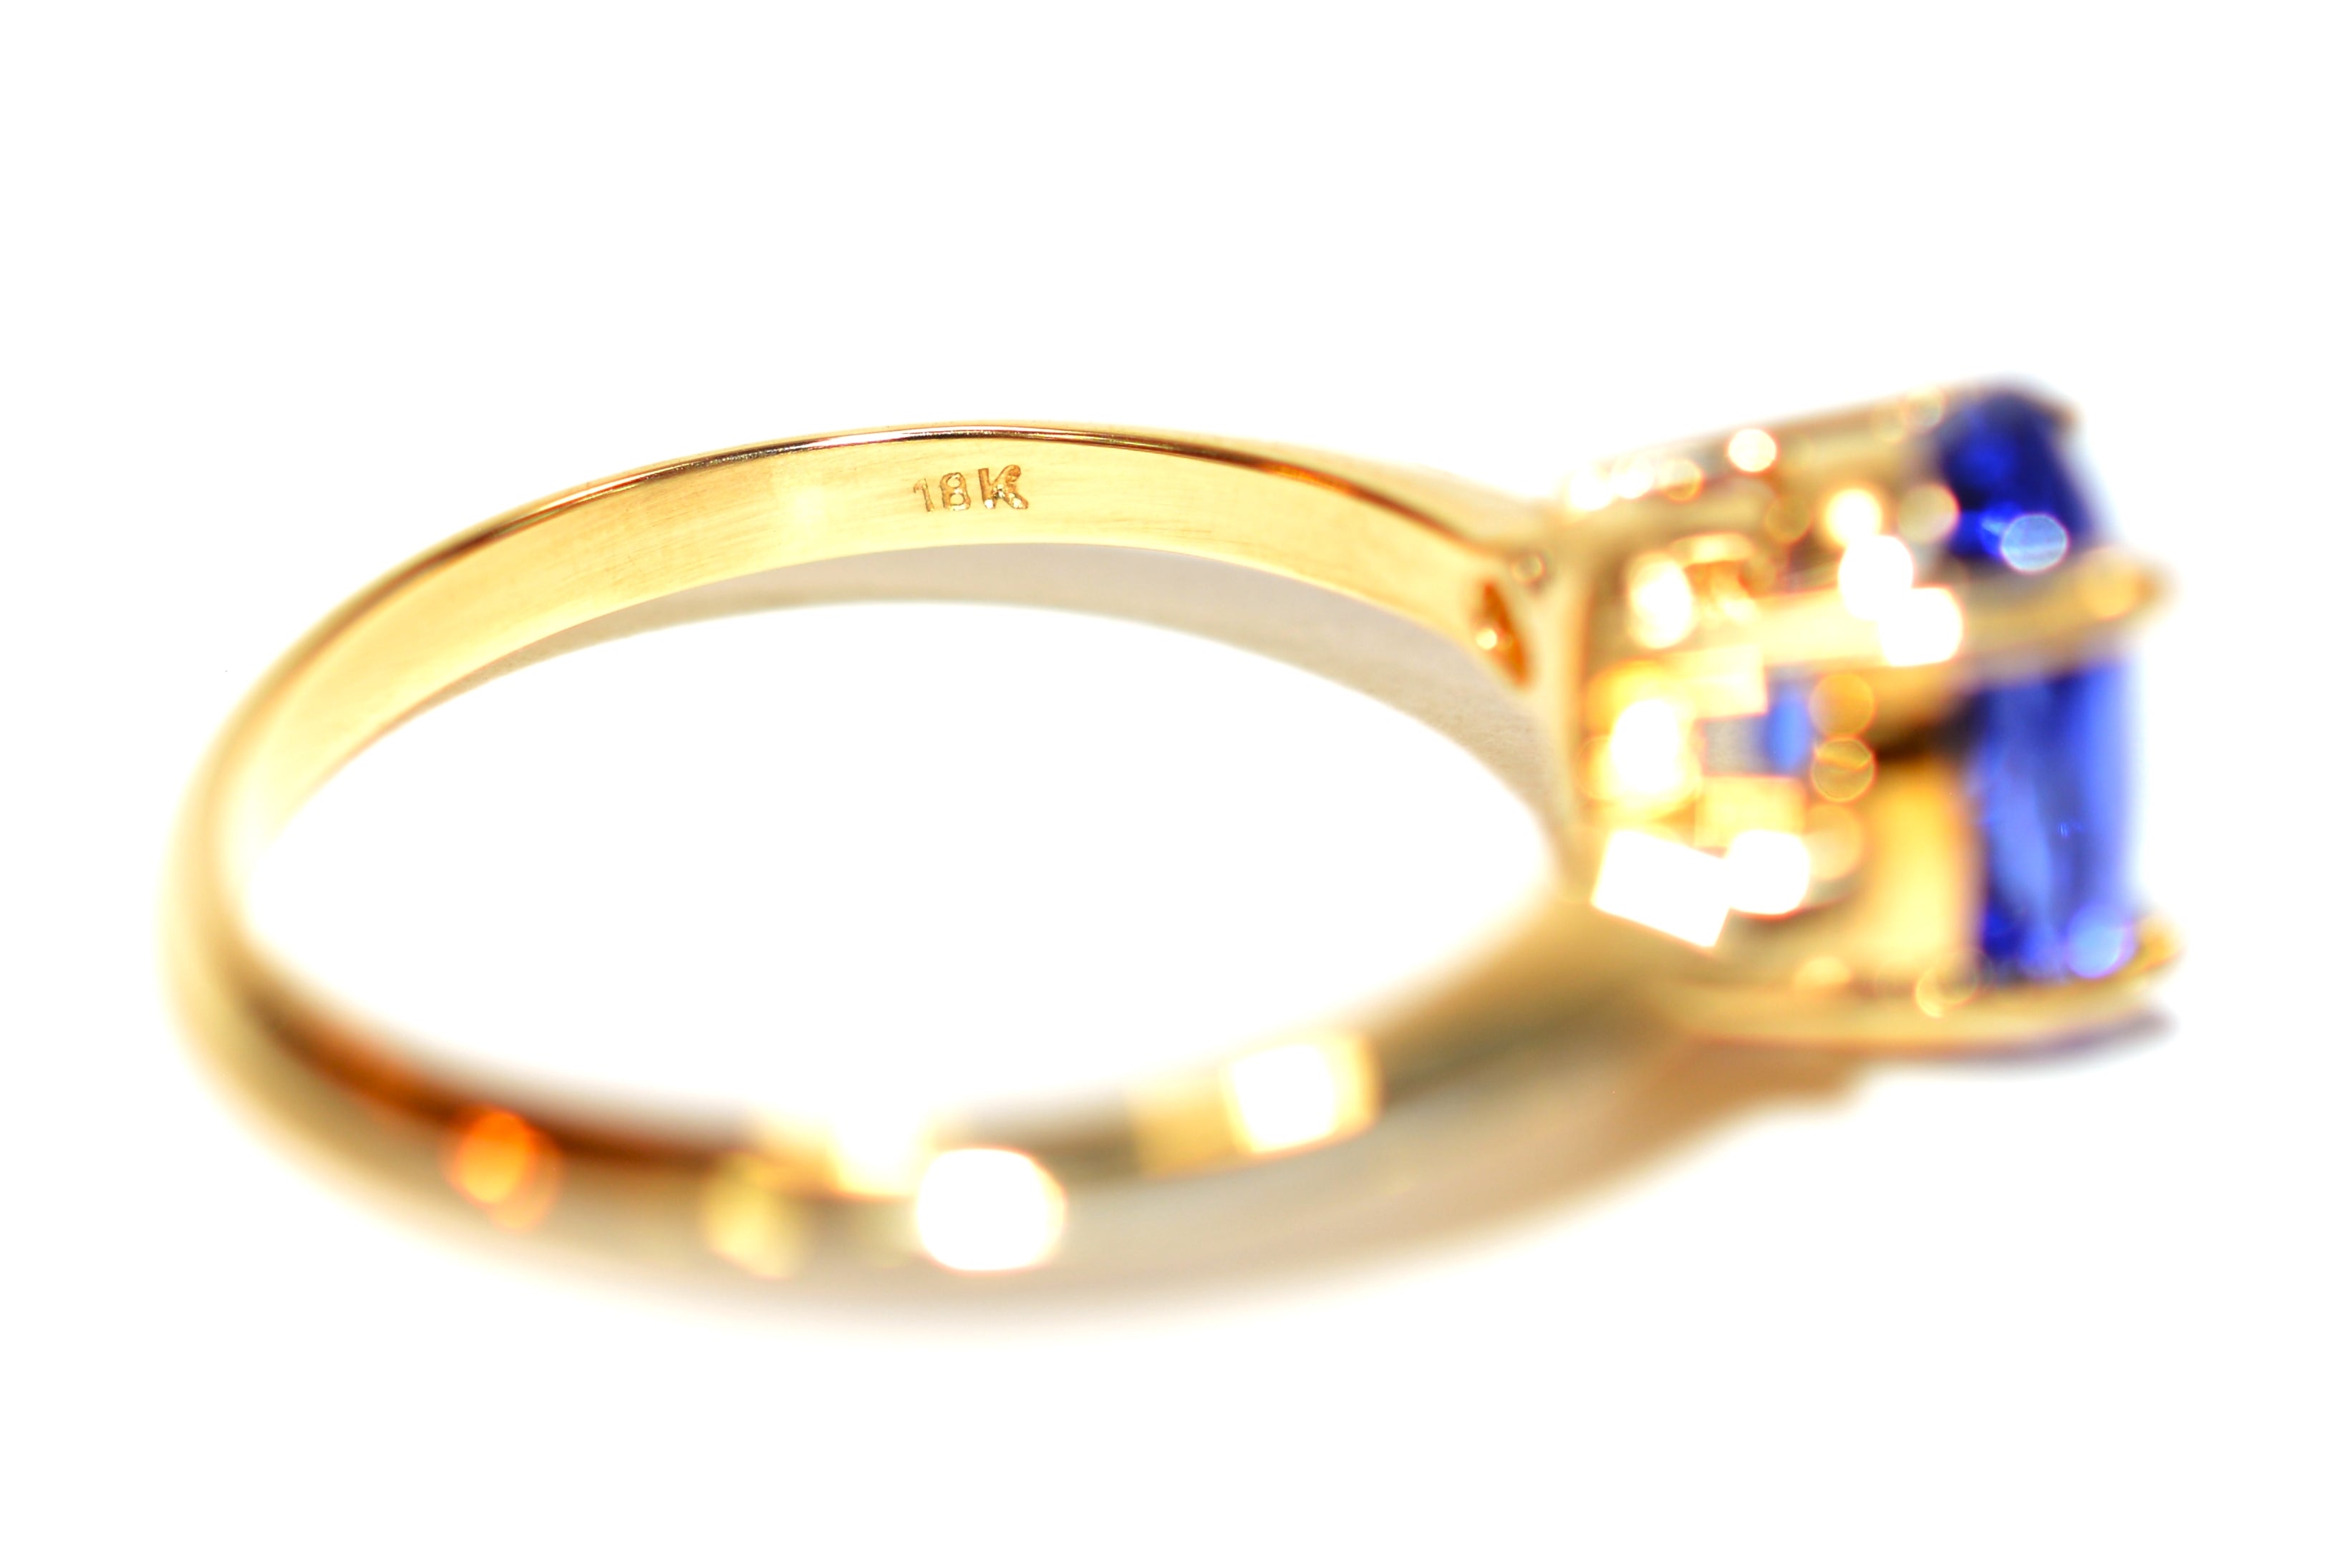 Certified Natural D'Block Tanzanite & Diamond Ring 18K Solid Gold 1.94tcw Gemstone Ring Birthstone Ring Engagement Ring Cocktail Ring Estate